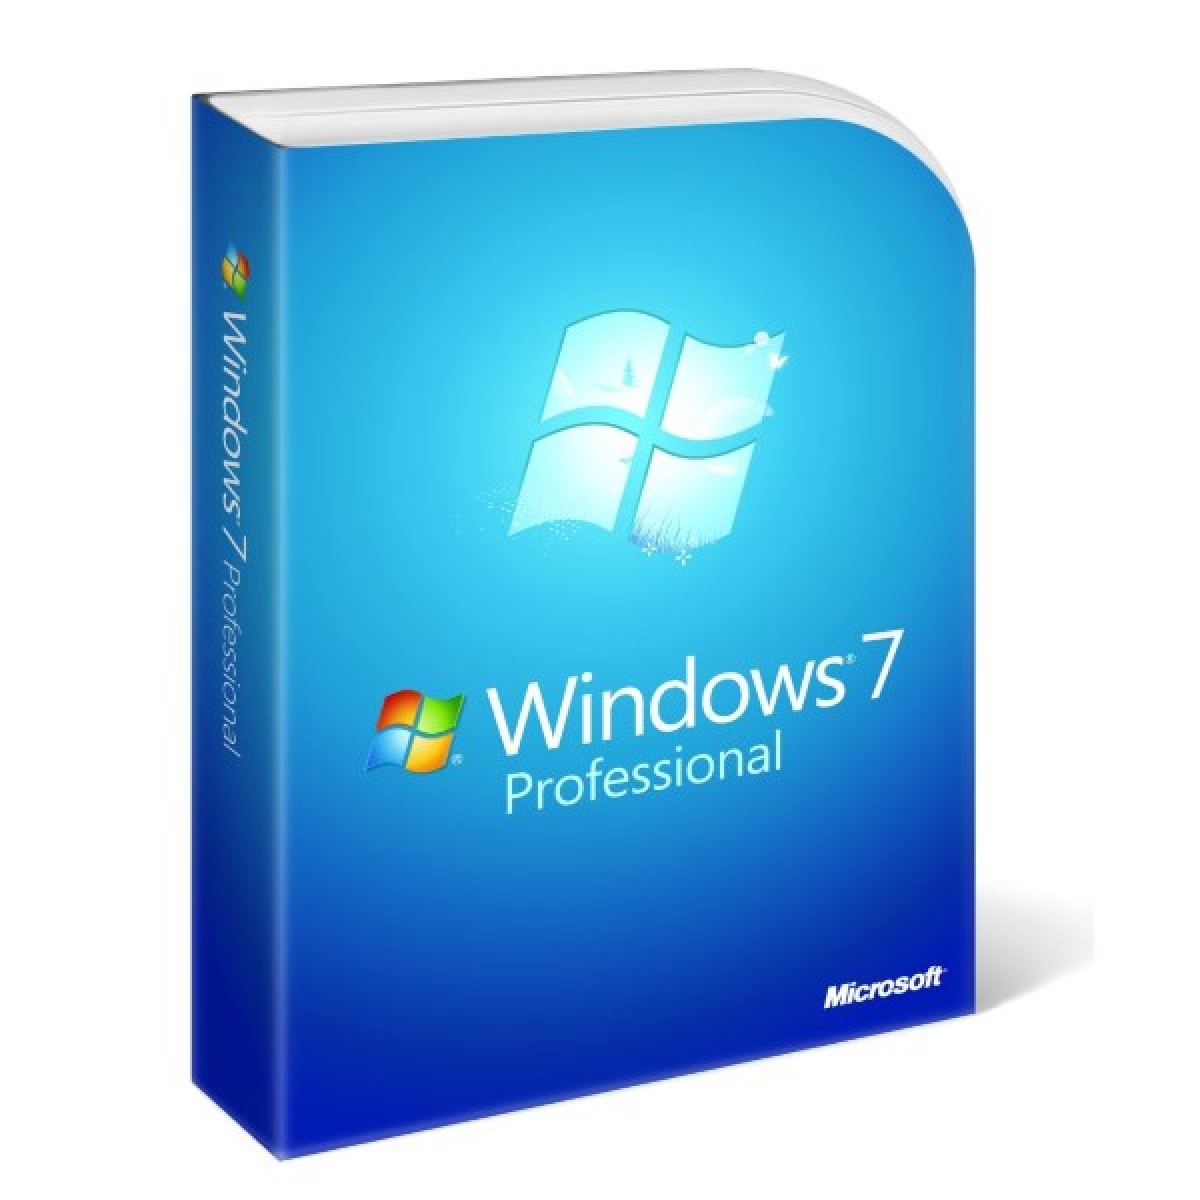 Windows 7 Professional 64 Bit Key Generator Online